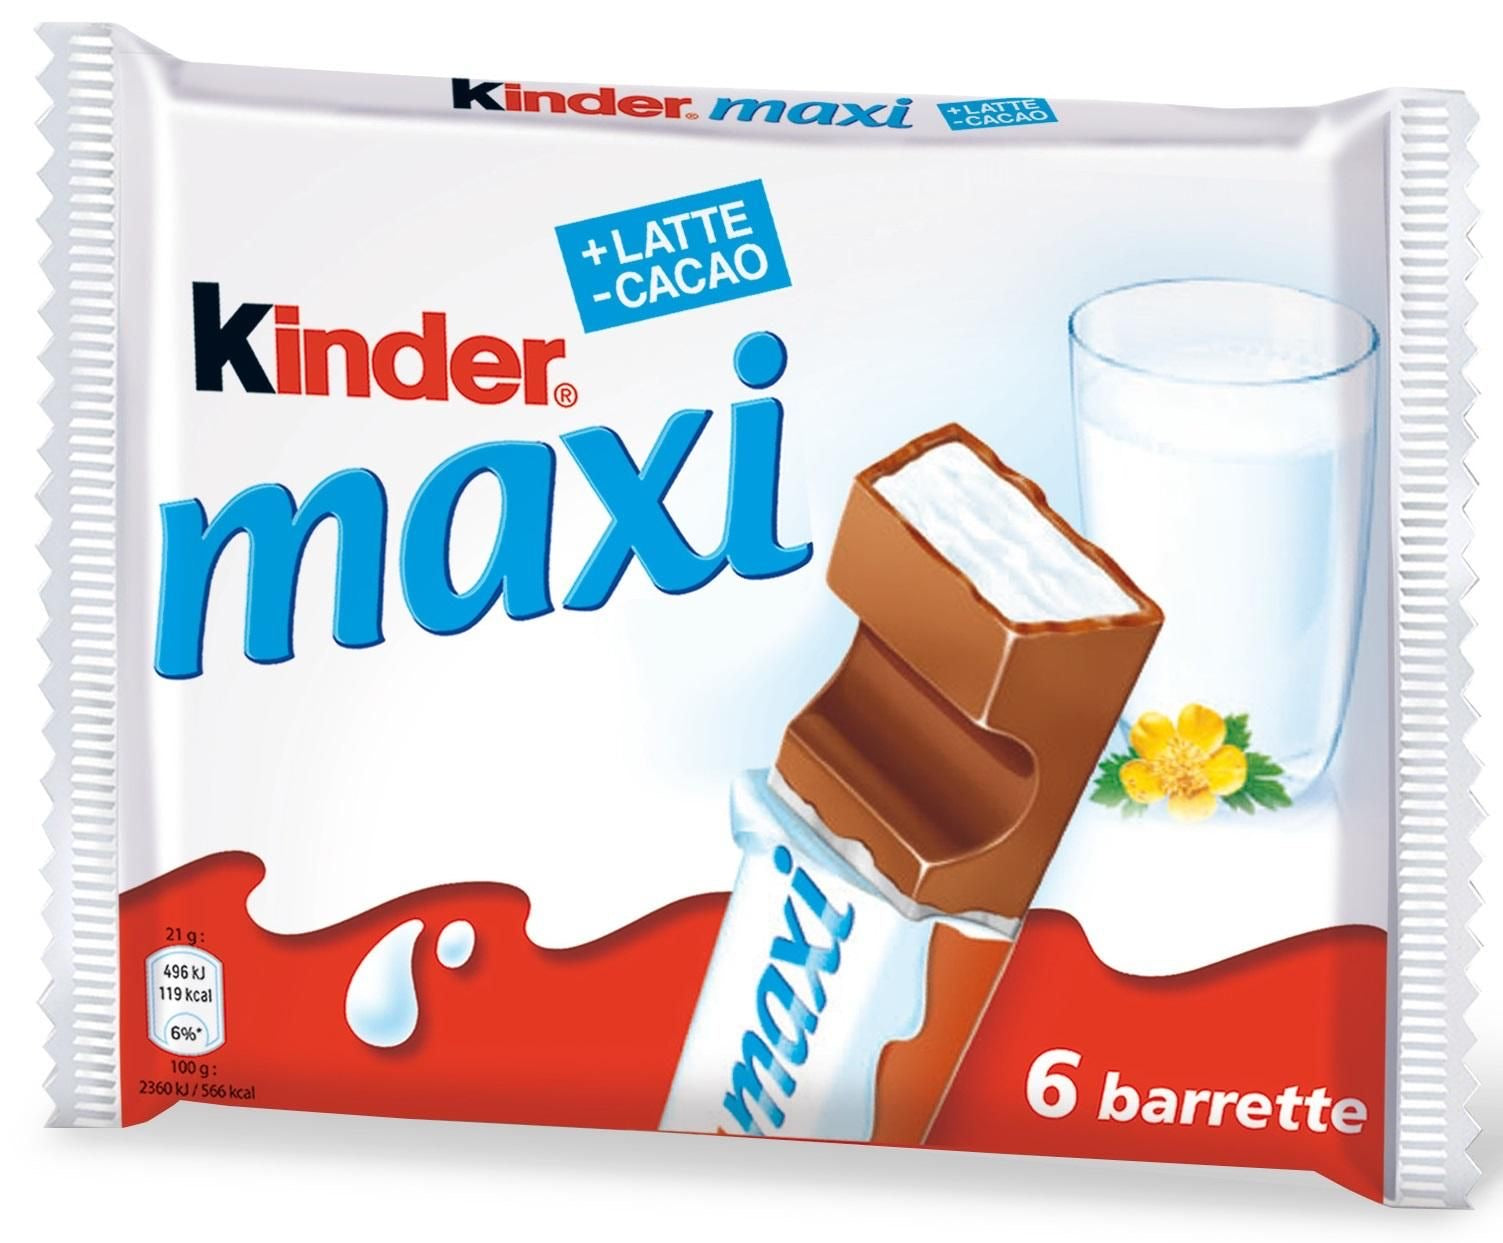 Buy Wholesale United States Kinder Pingui Cioccolato X4 120 Gr (9 In A Box)  & Kinder Pingui at USD 6